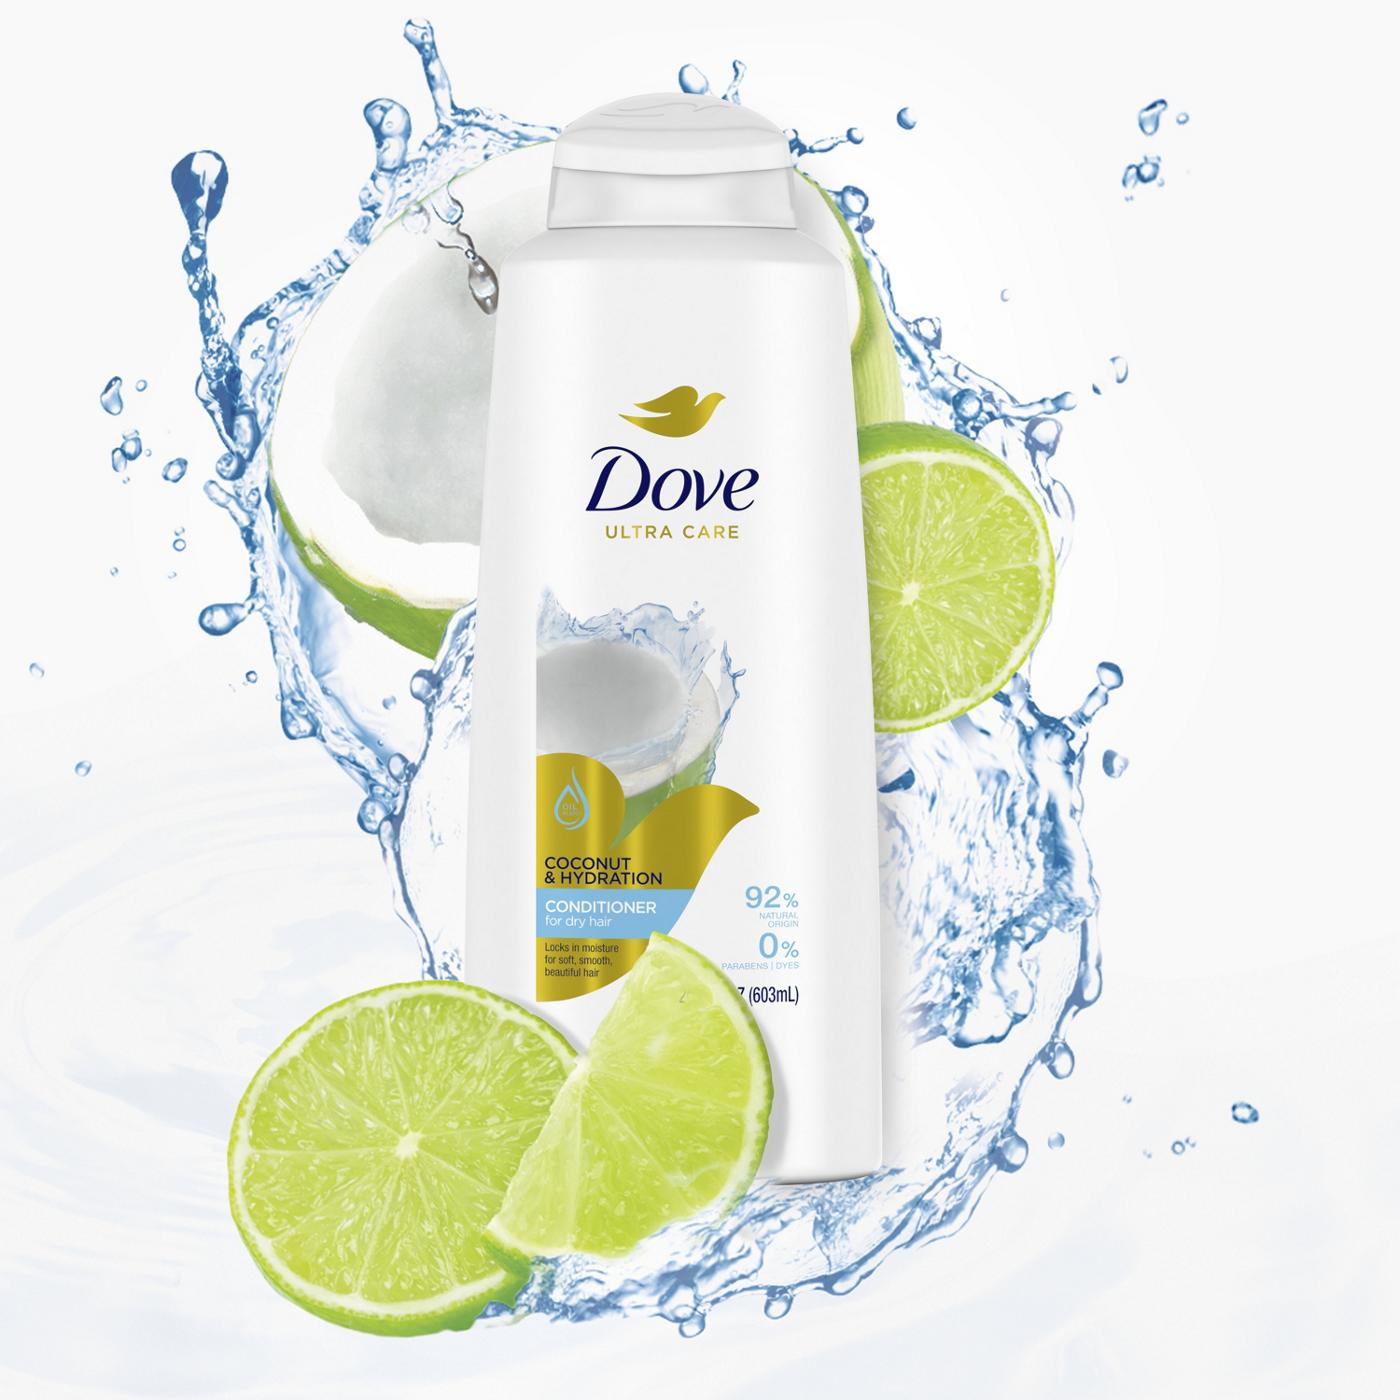 Dove Ultra Care Conditioner - Coconut & Hydration; image 6 of 12